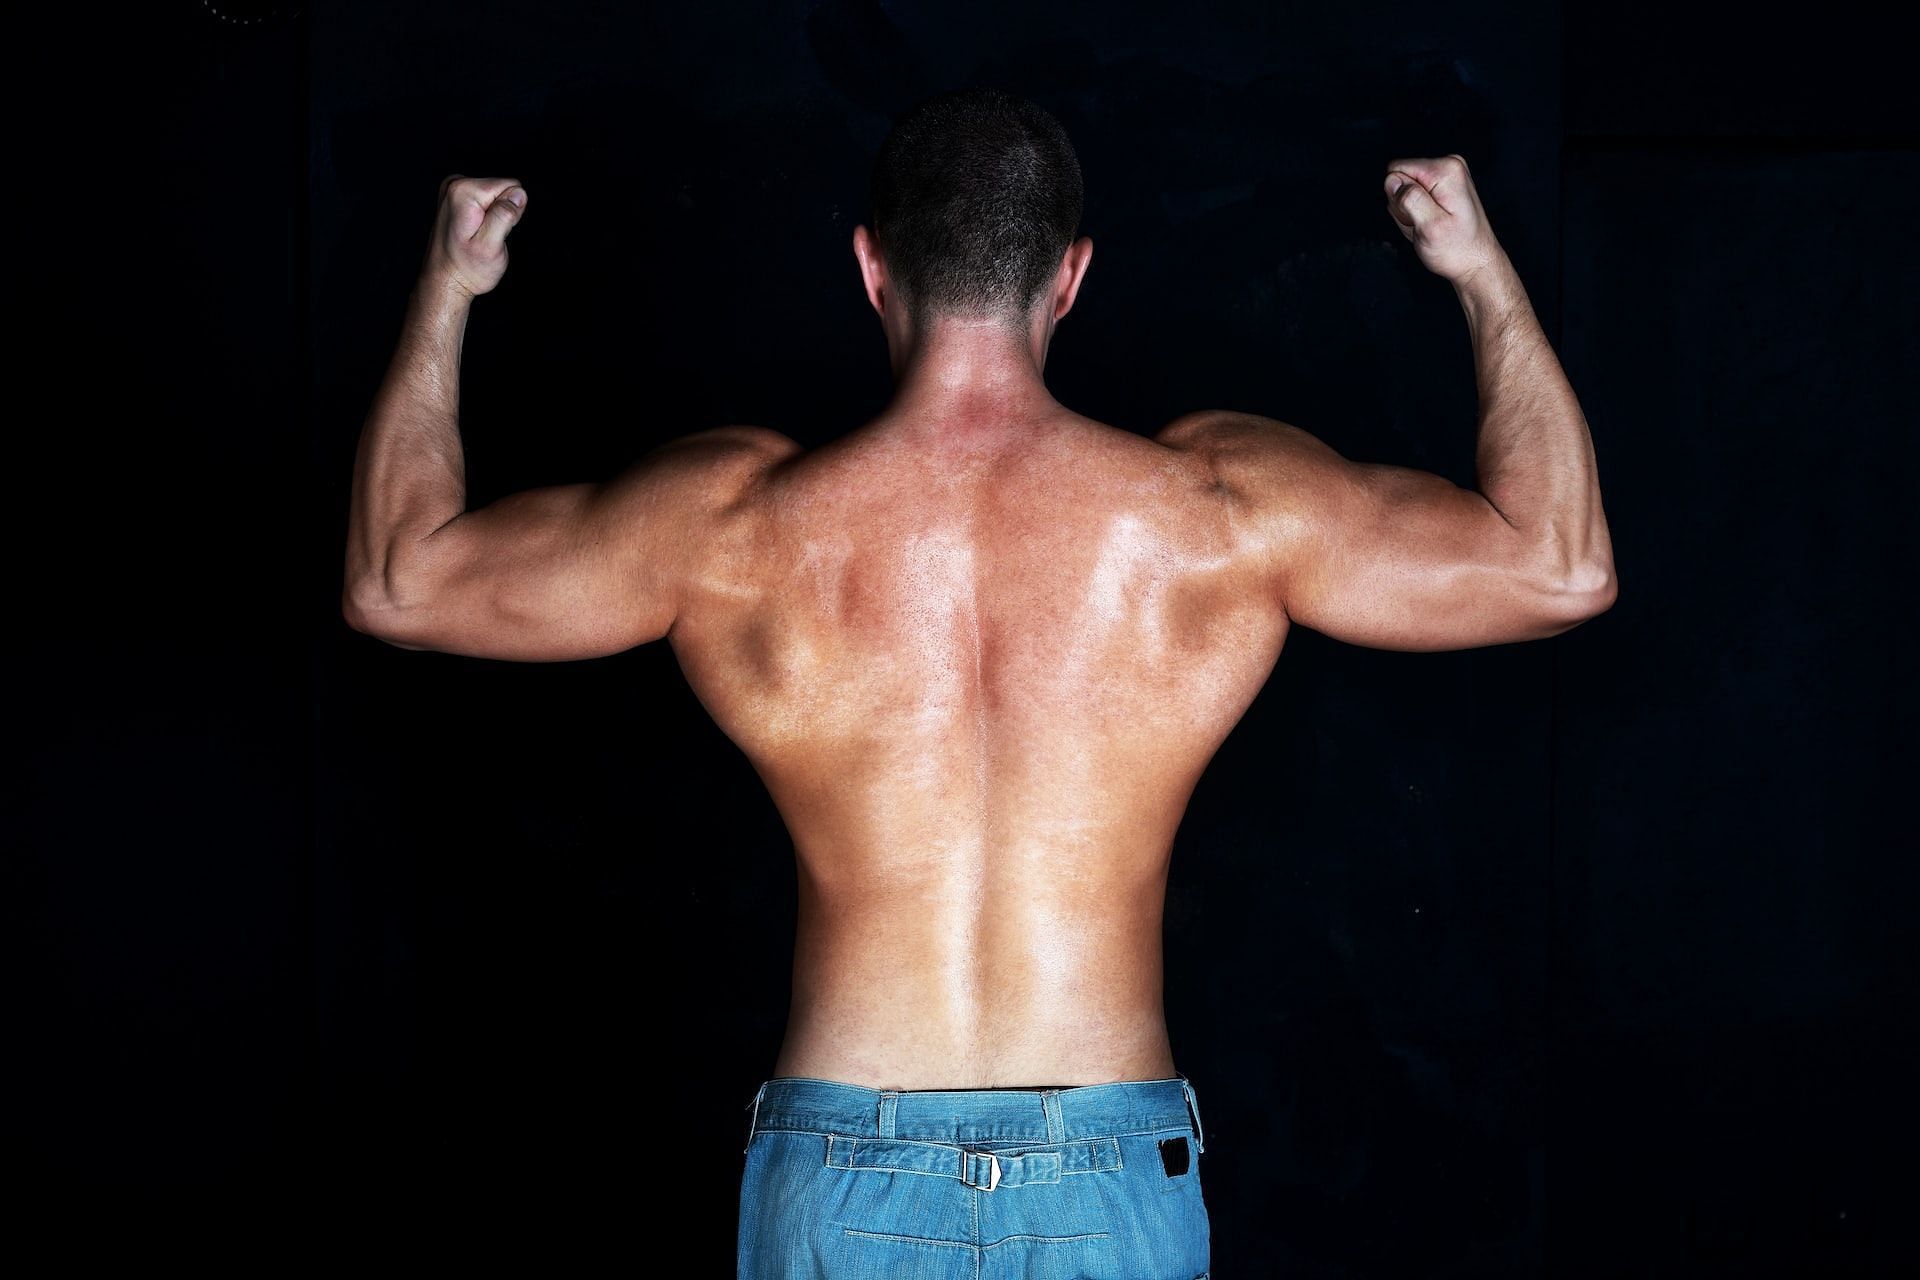 Erector spinae strengthening exercises improve the functioning of the back muscles. (Photo via Unsplash/engin akyurt)